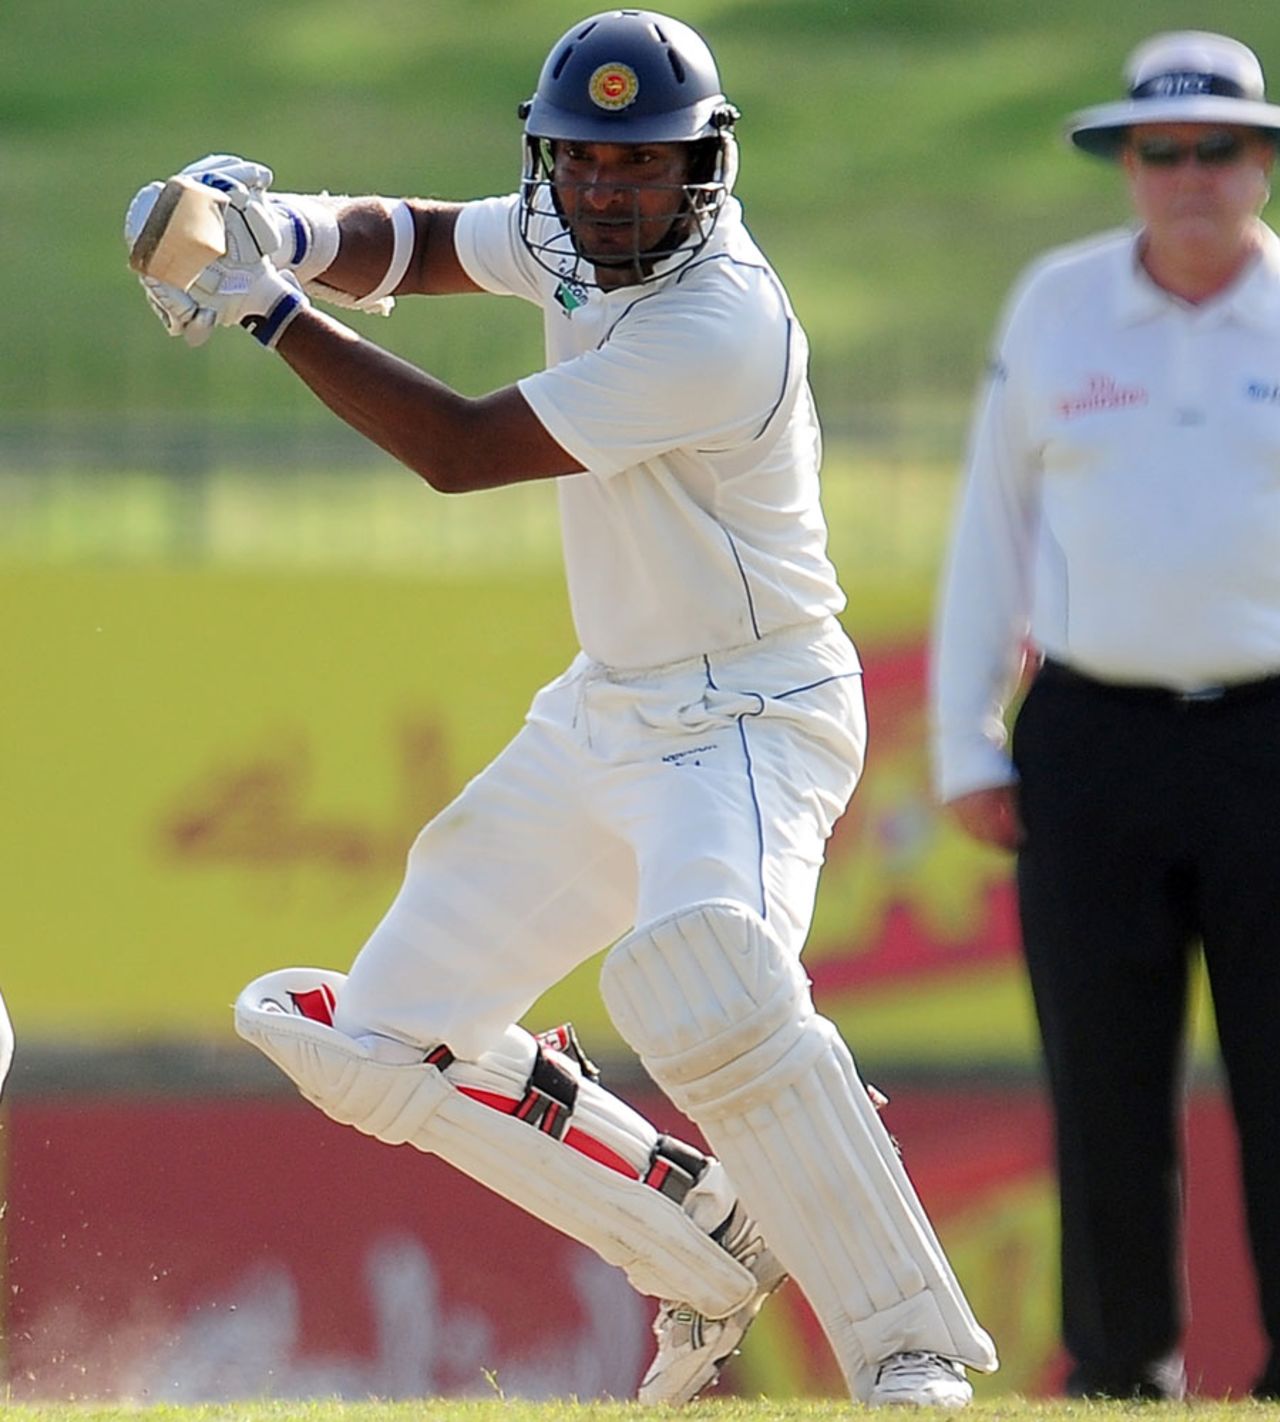 Kumar Sangakkara got another fifty-plus score against Pakistan, Sri Lanka v Pakistan, 3rd Test, Pallekele, 5th day, July 12, 2012